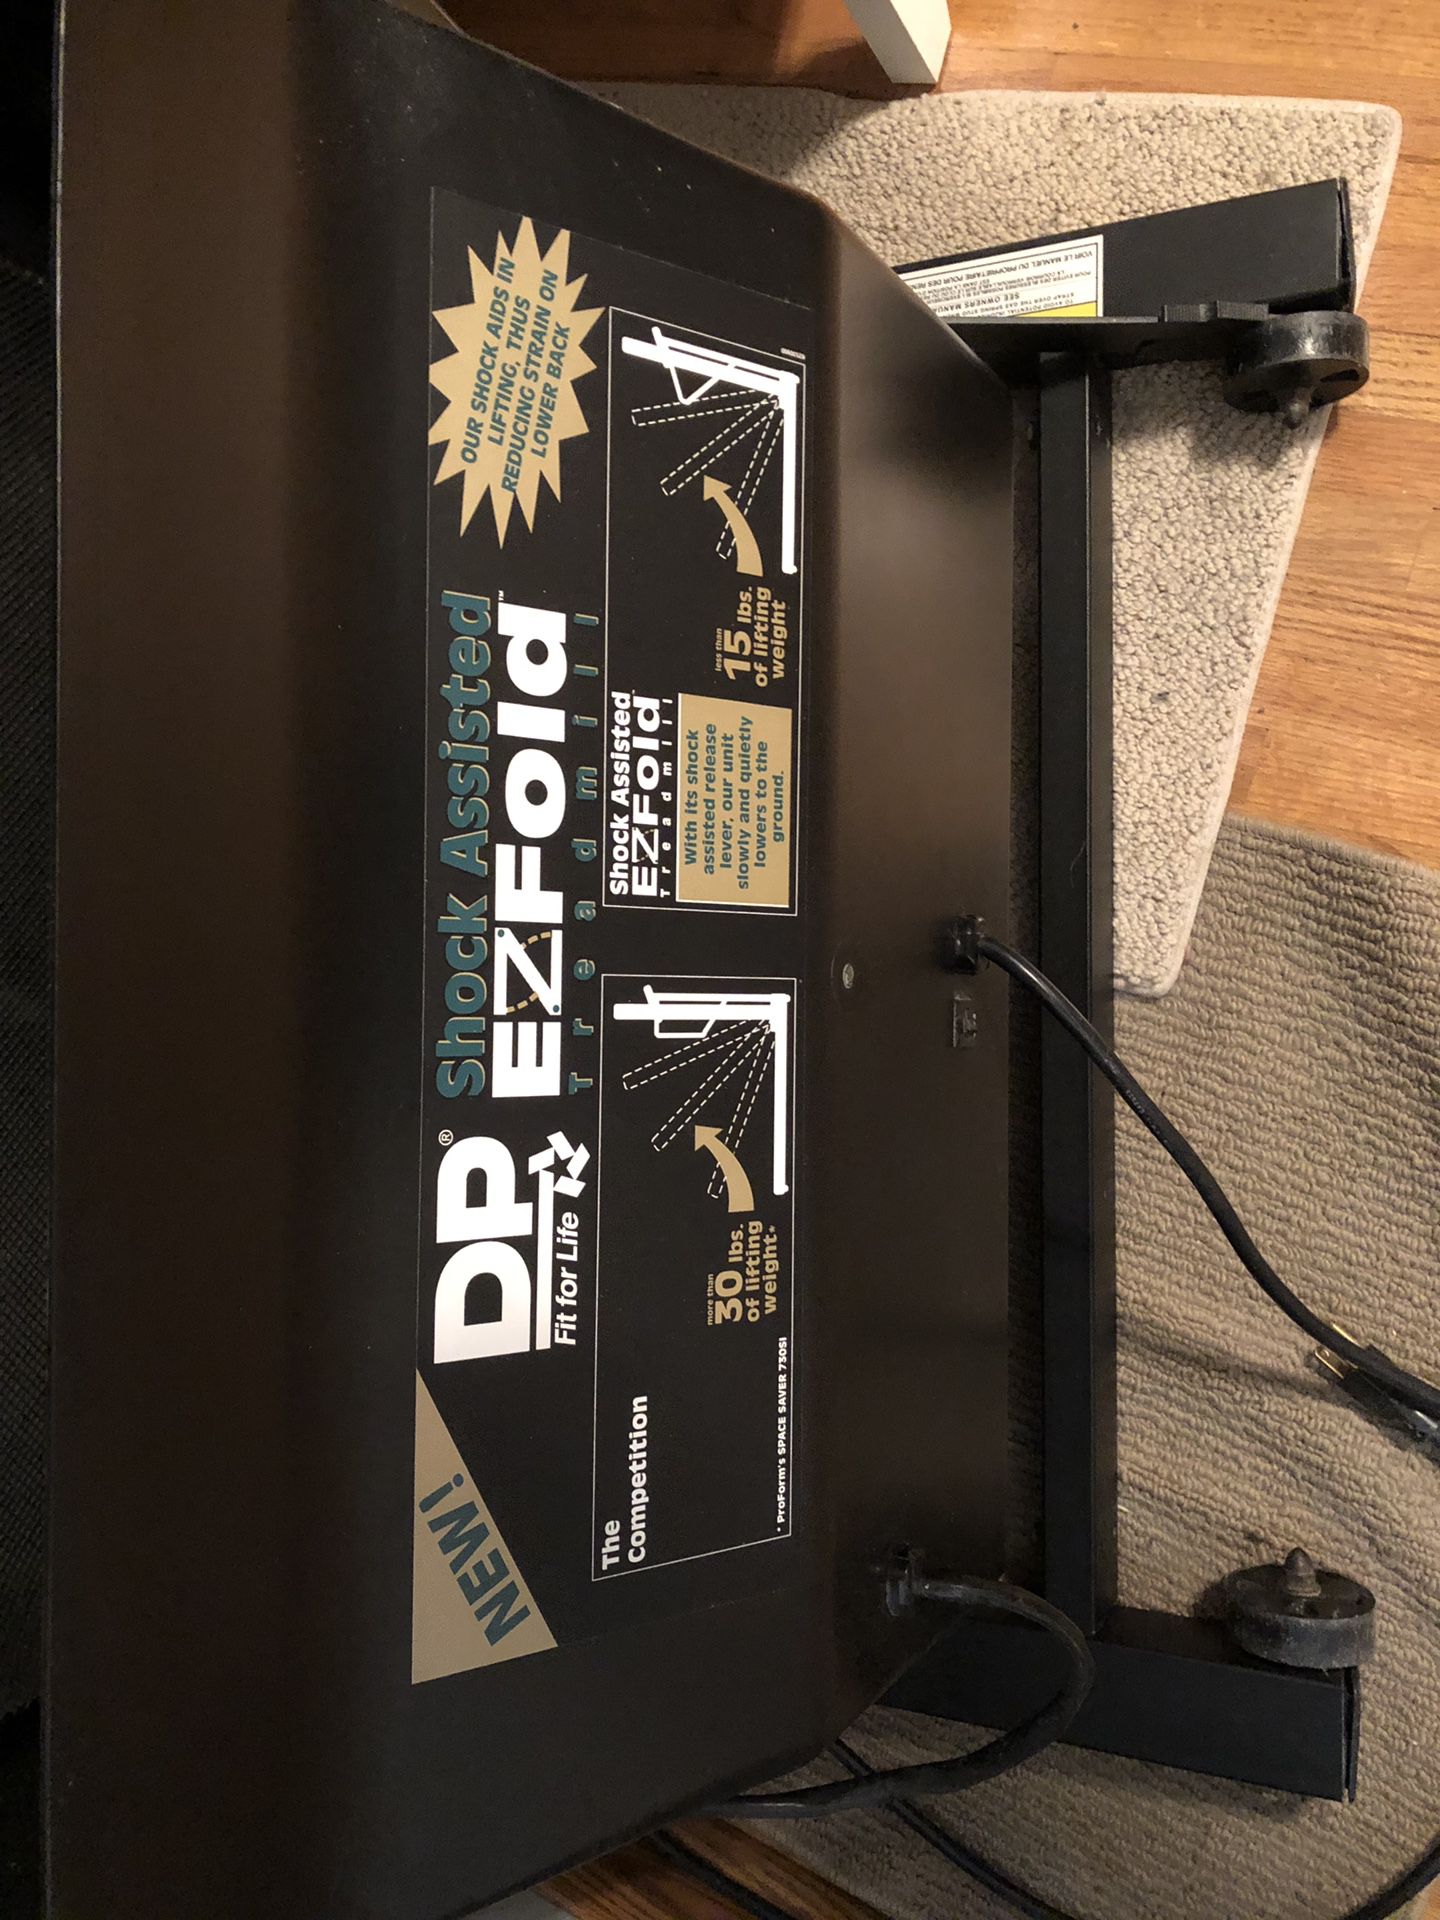 DP EZFold treadmill